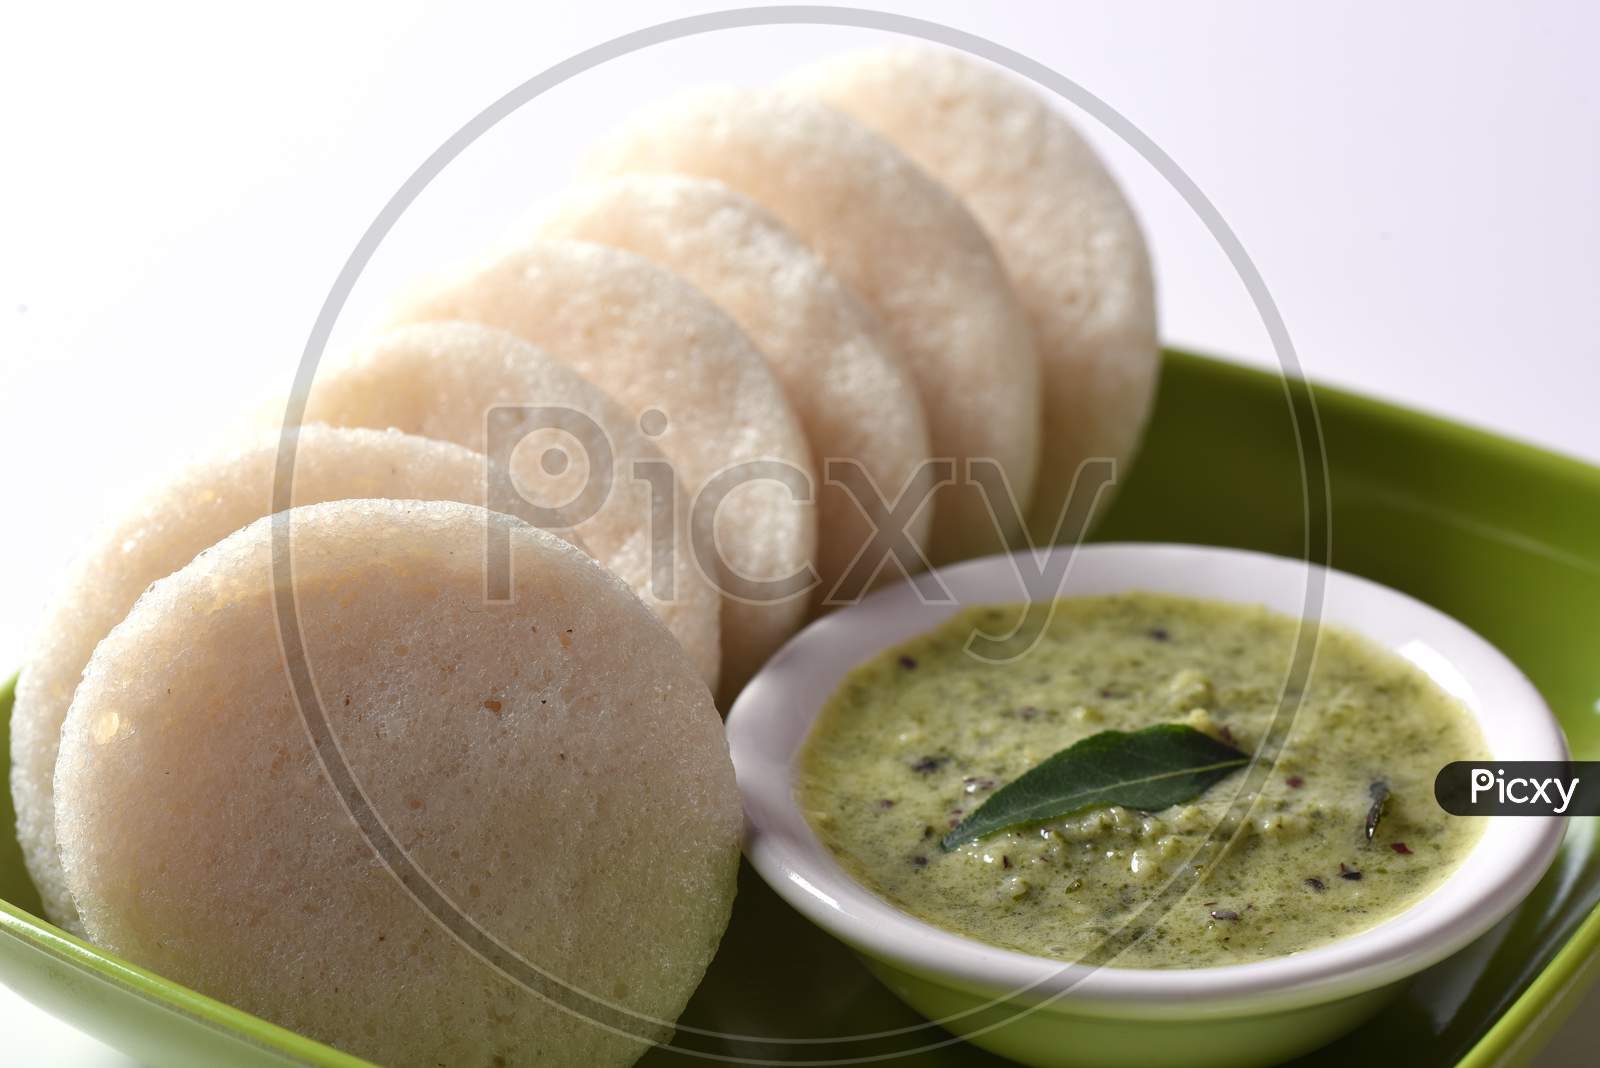 Idli With Sambar And Coconut Chutney, Indian Dish : South Indian Favourite Food Rava Idli Or Semolina Idly Or Rava Idly, Served With Sambar And Green Coconut Chutney.